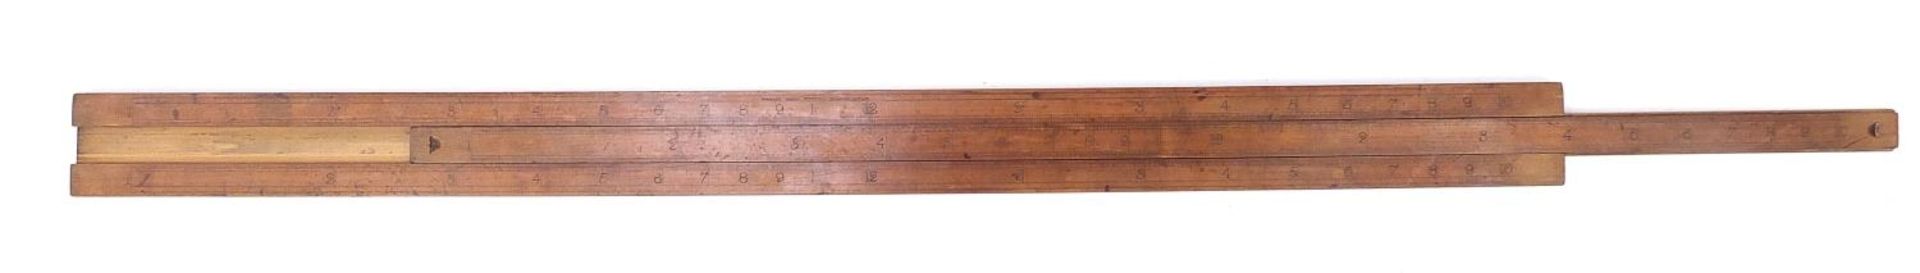 Antique Stanley boxwood three foot sliding rule impressed Stanley Great Turnstile Holborn London, - Bild 3 aus 14